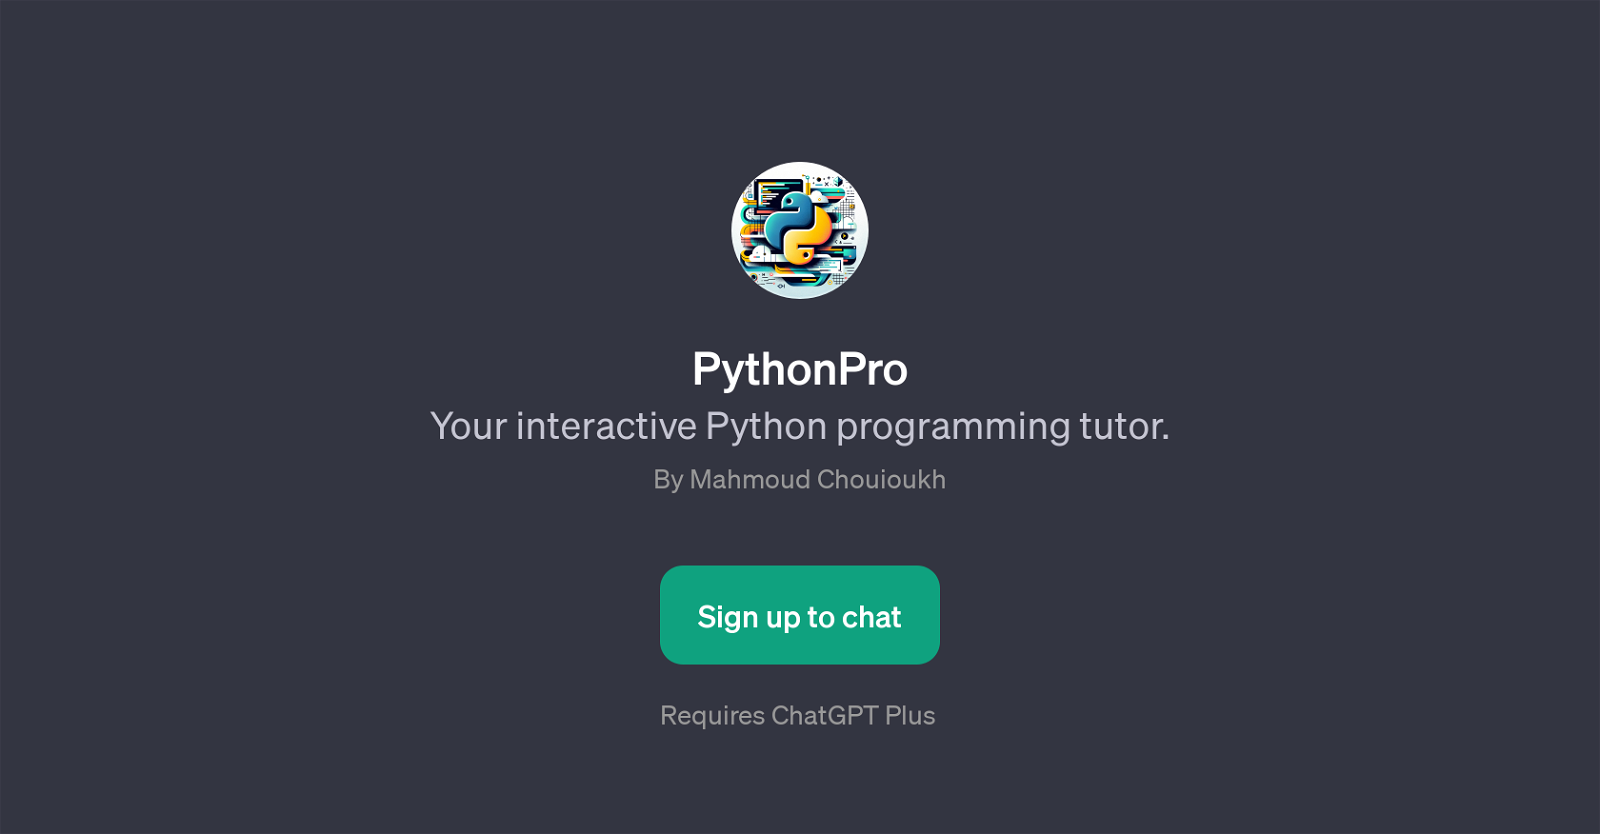 PythonPro website